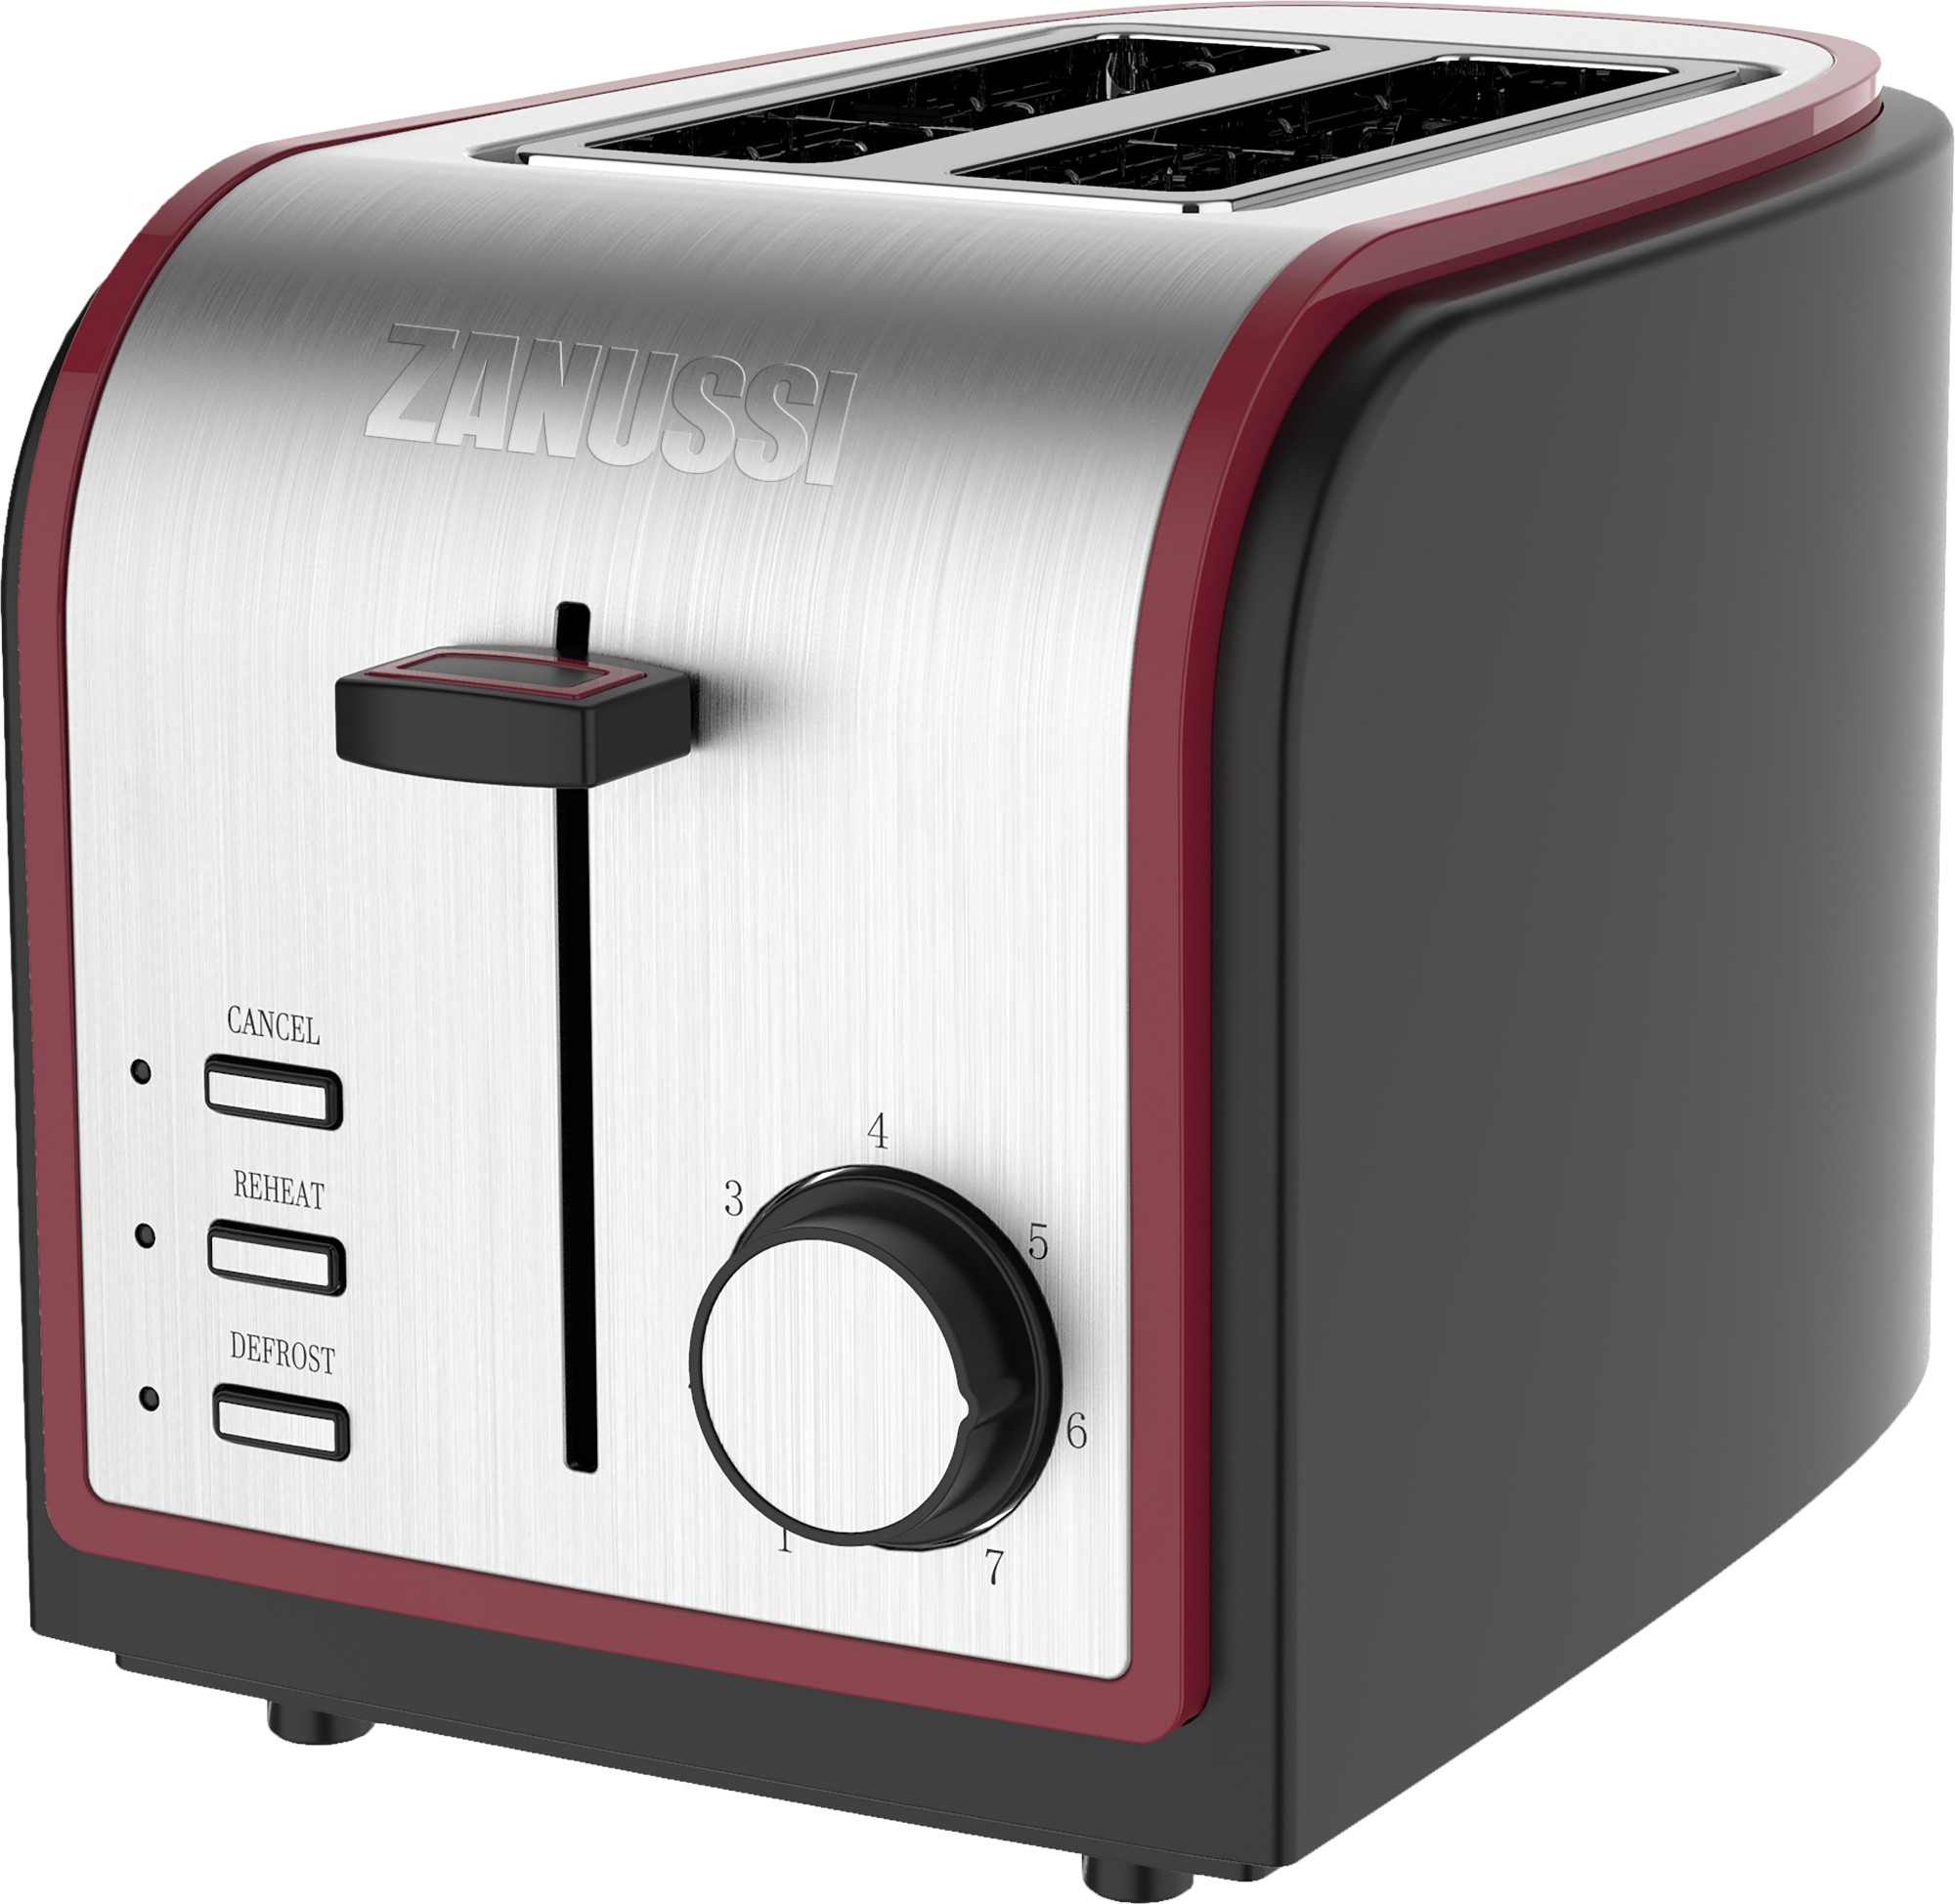 Zanussi ZST-6579-RD toaster 2 slice(s) 800 W Grey, Red